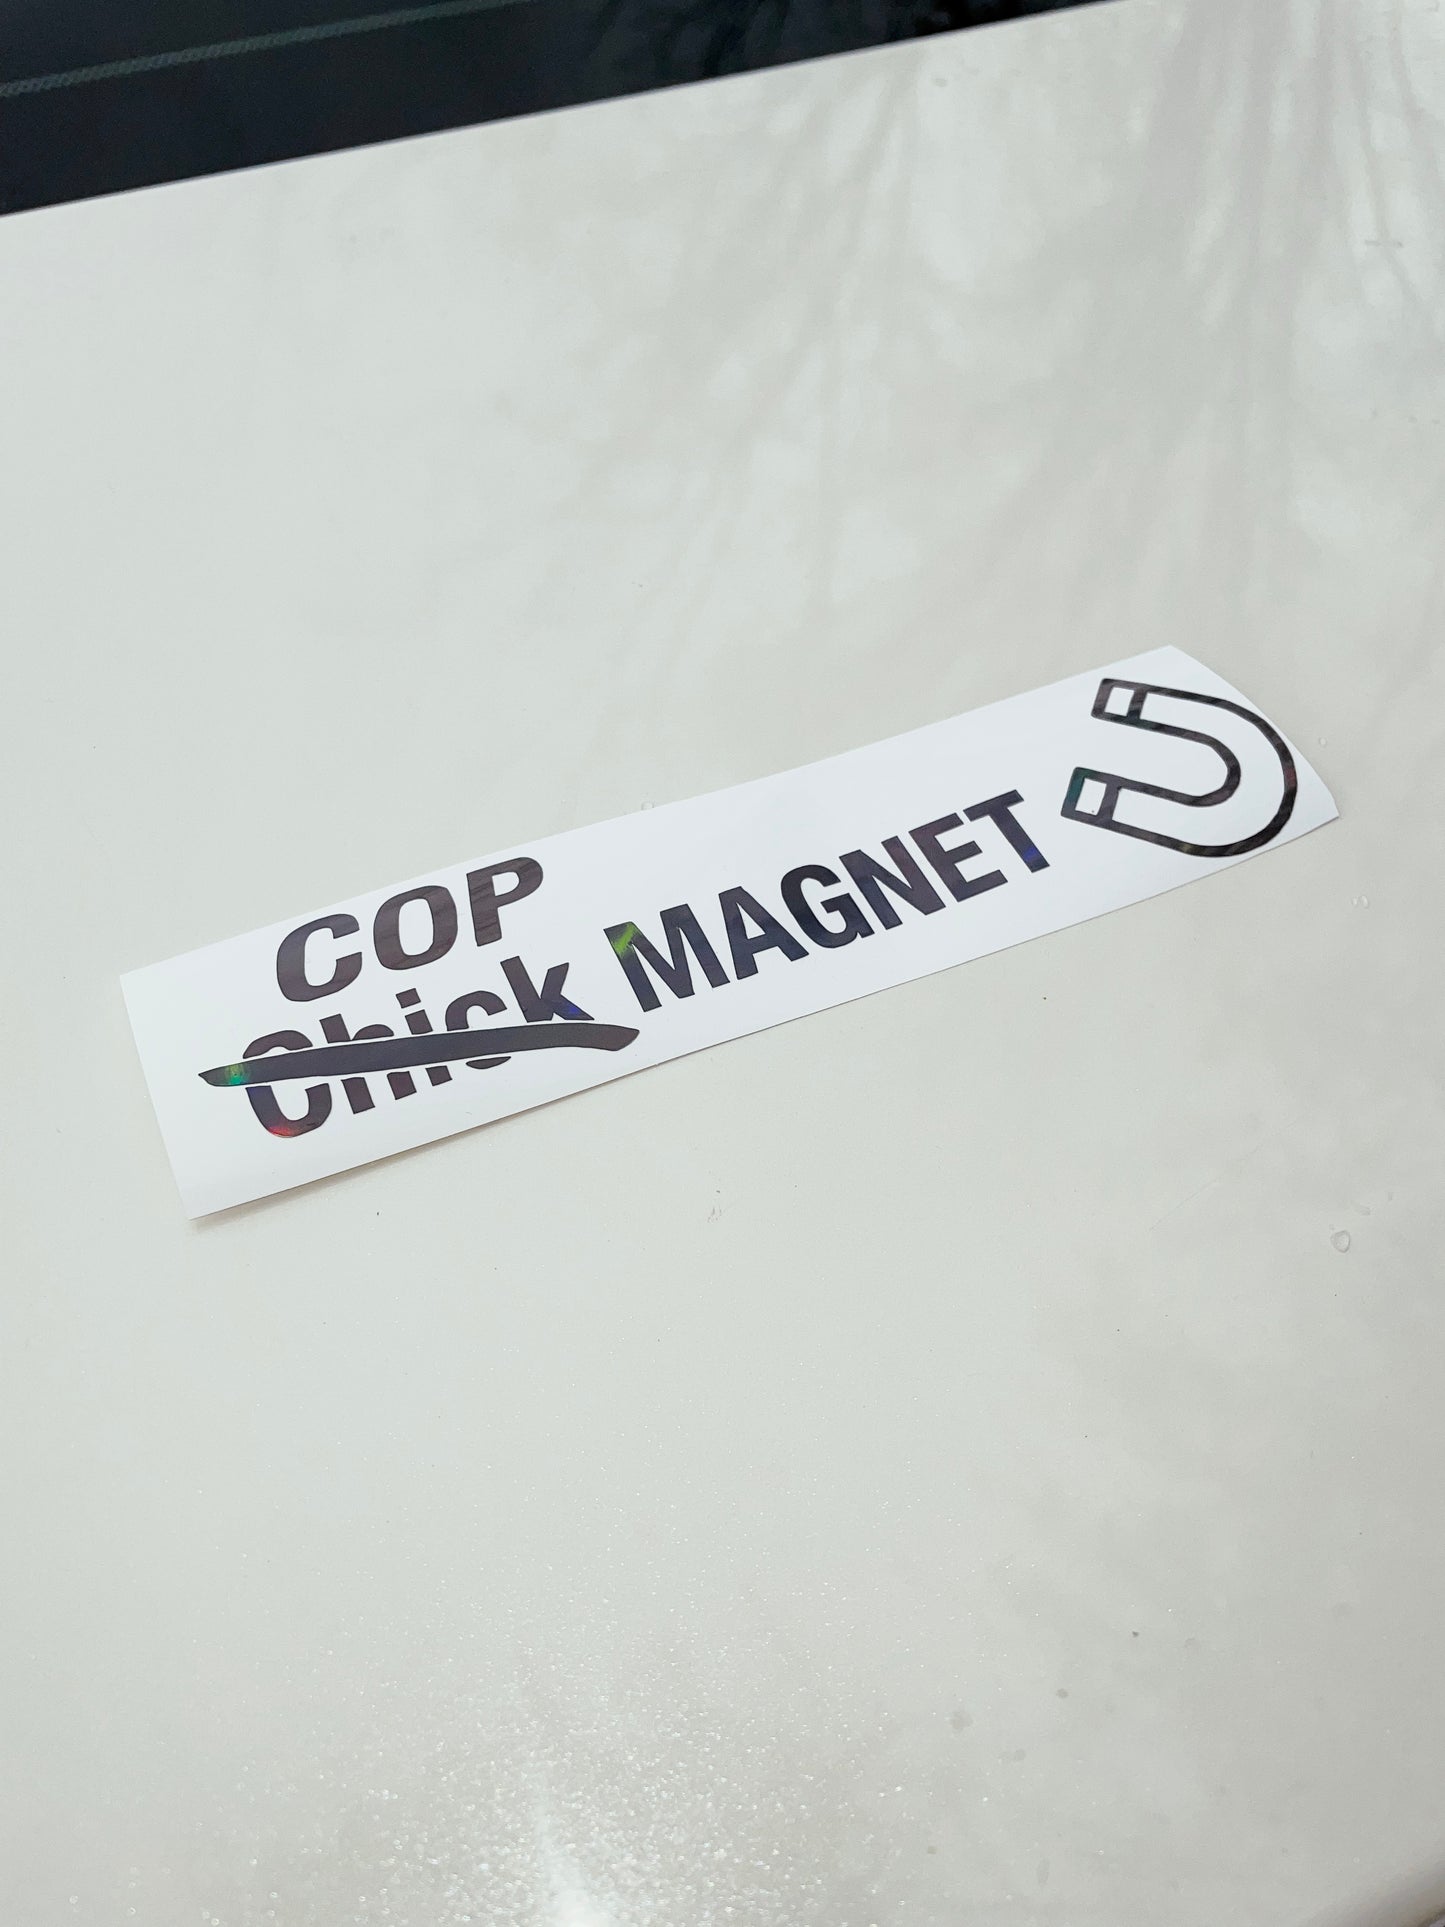 Cop magnet